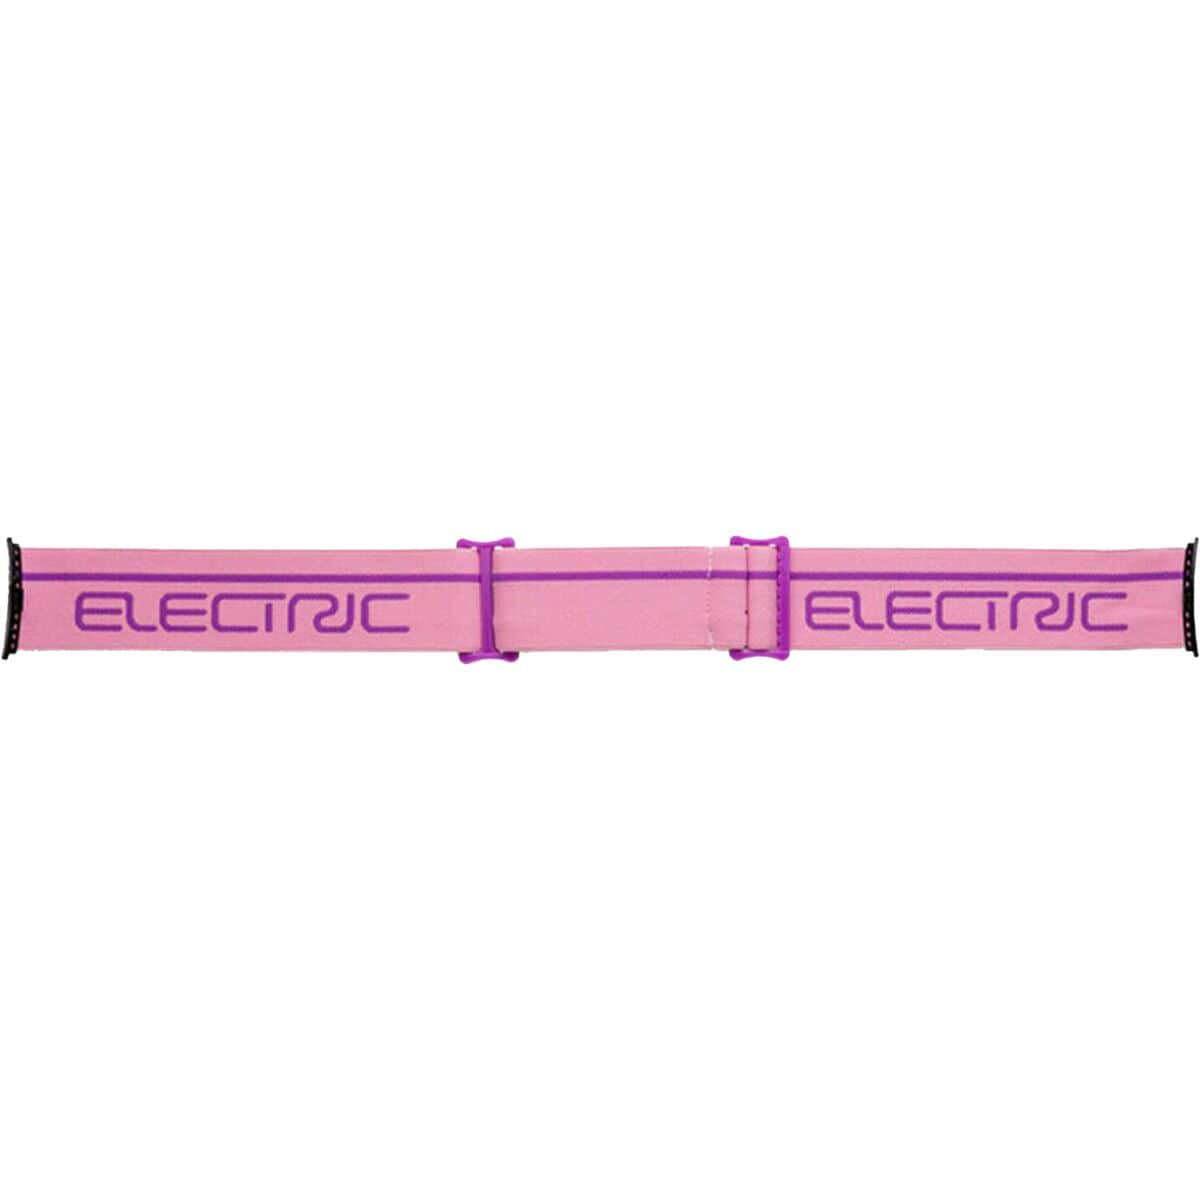  Electric EG2-T.S Goggles - Women